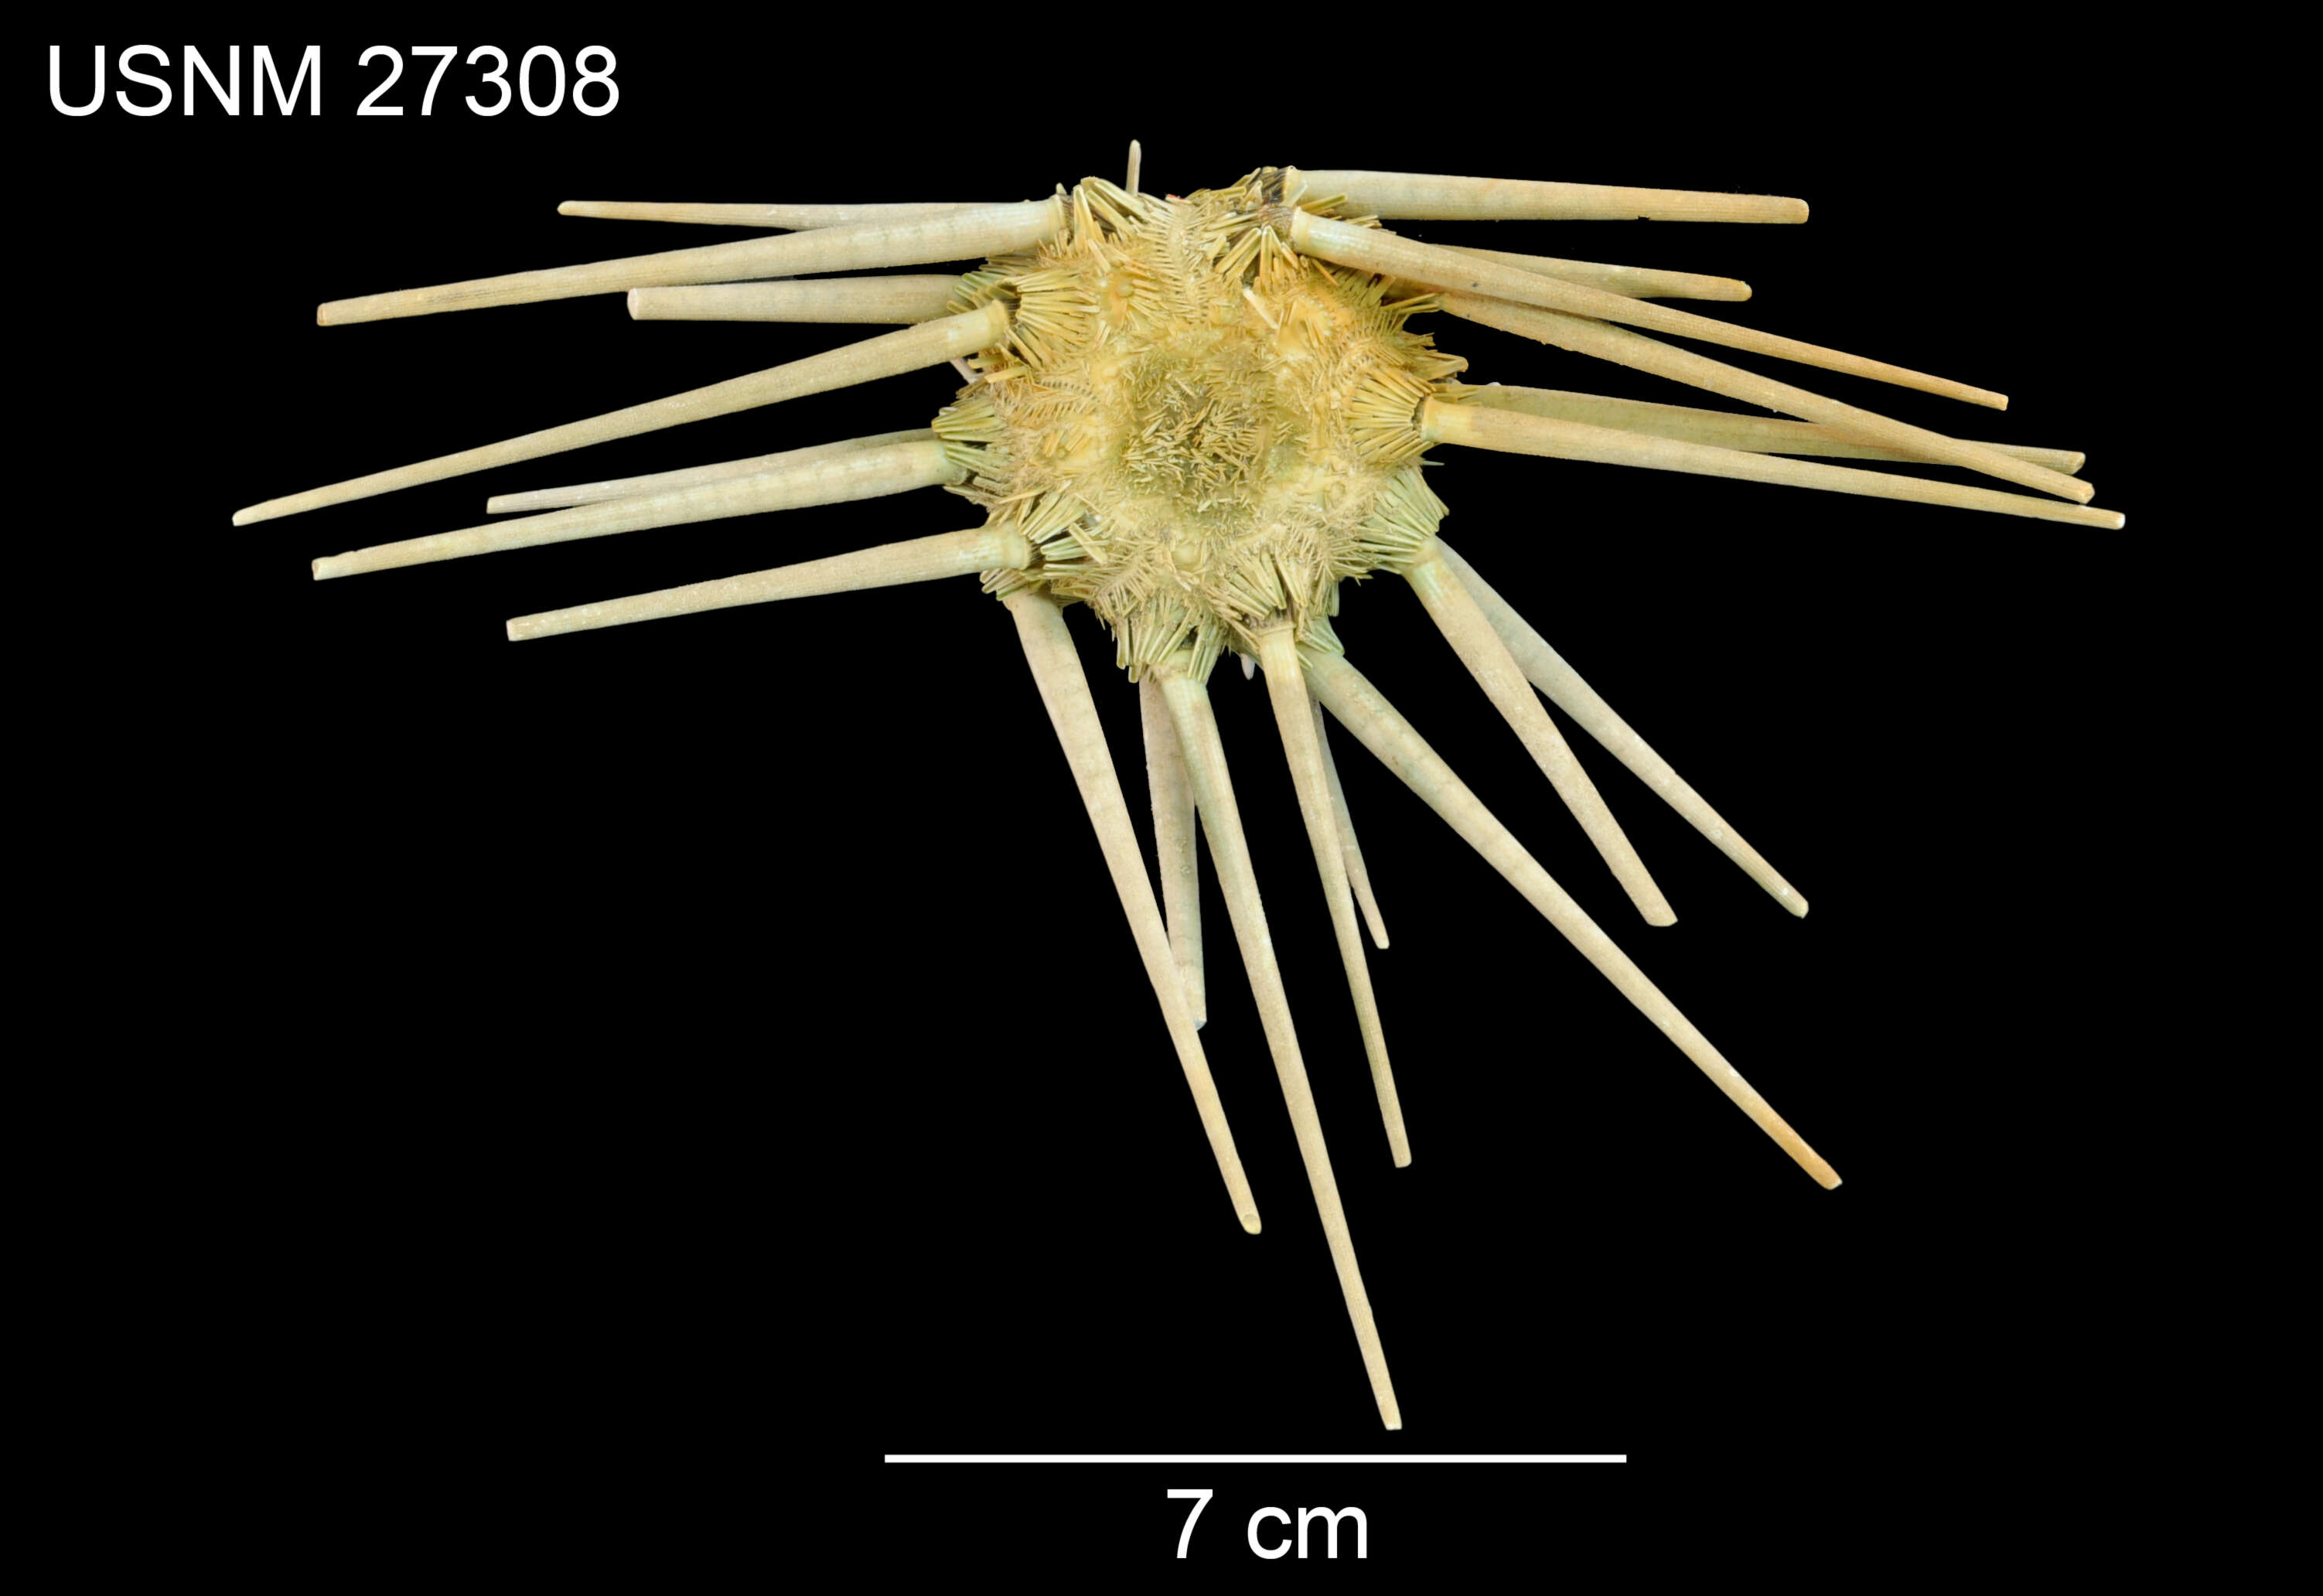 Image of Stylocidaris calacantha (A. Agassiz & H. L. Clark 1907)